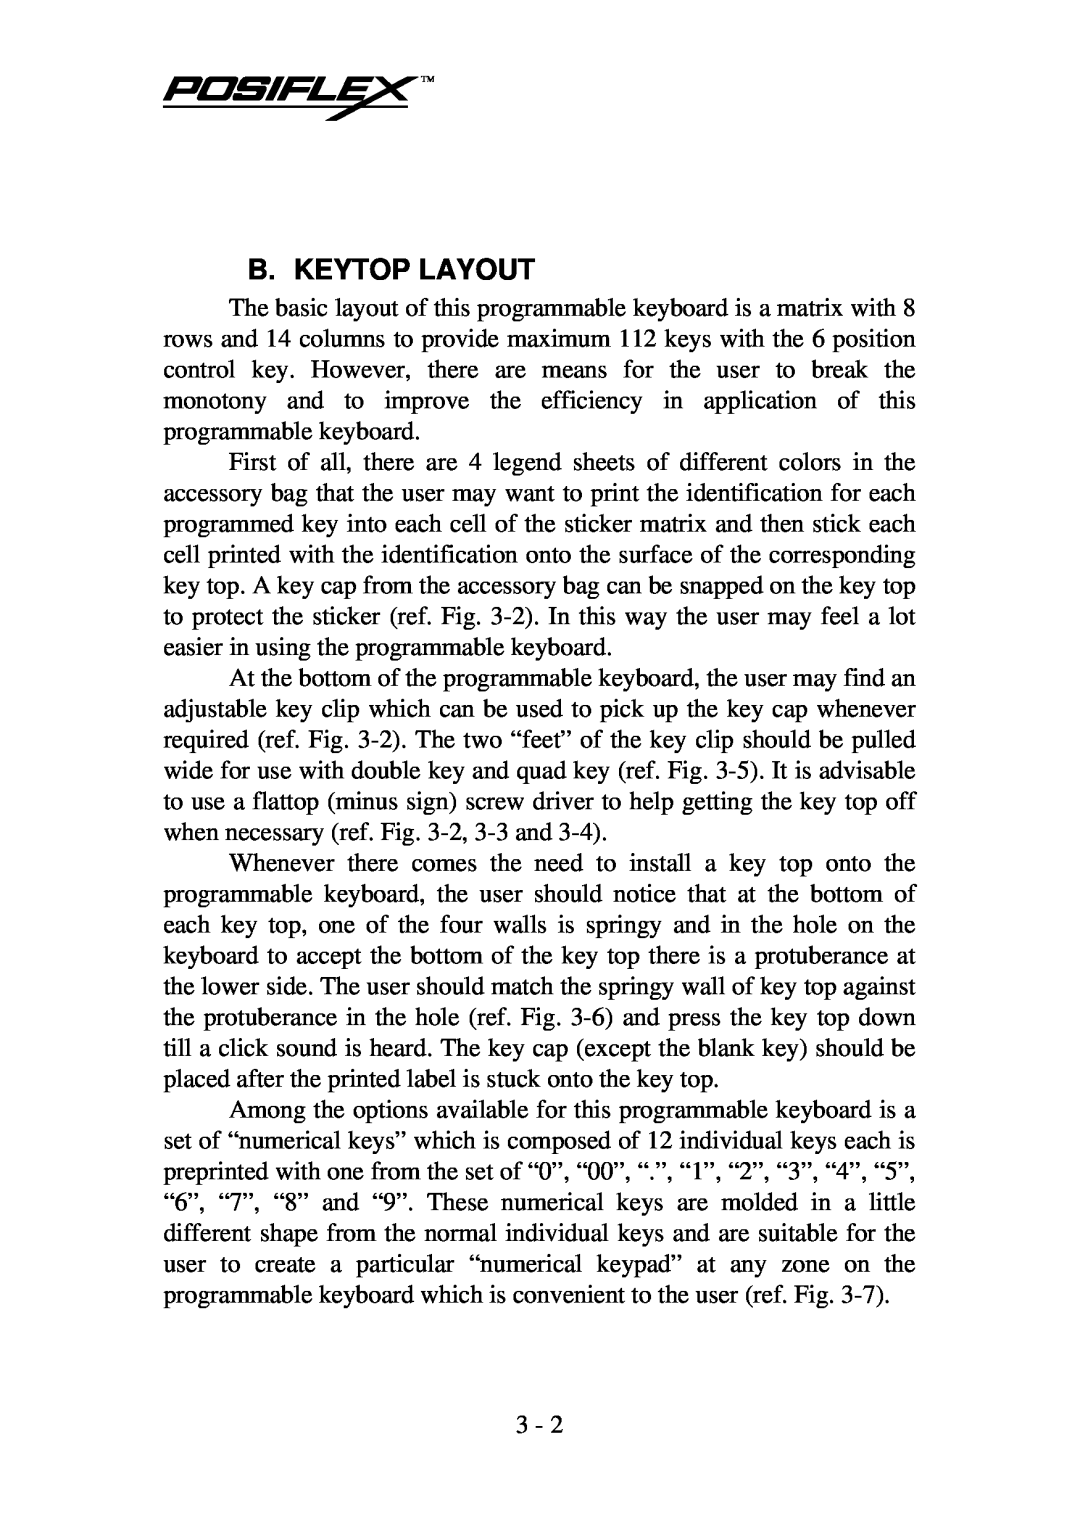 Mustek KB3100 user manual B. Keytop Layout 